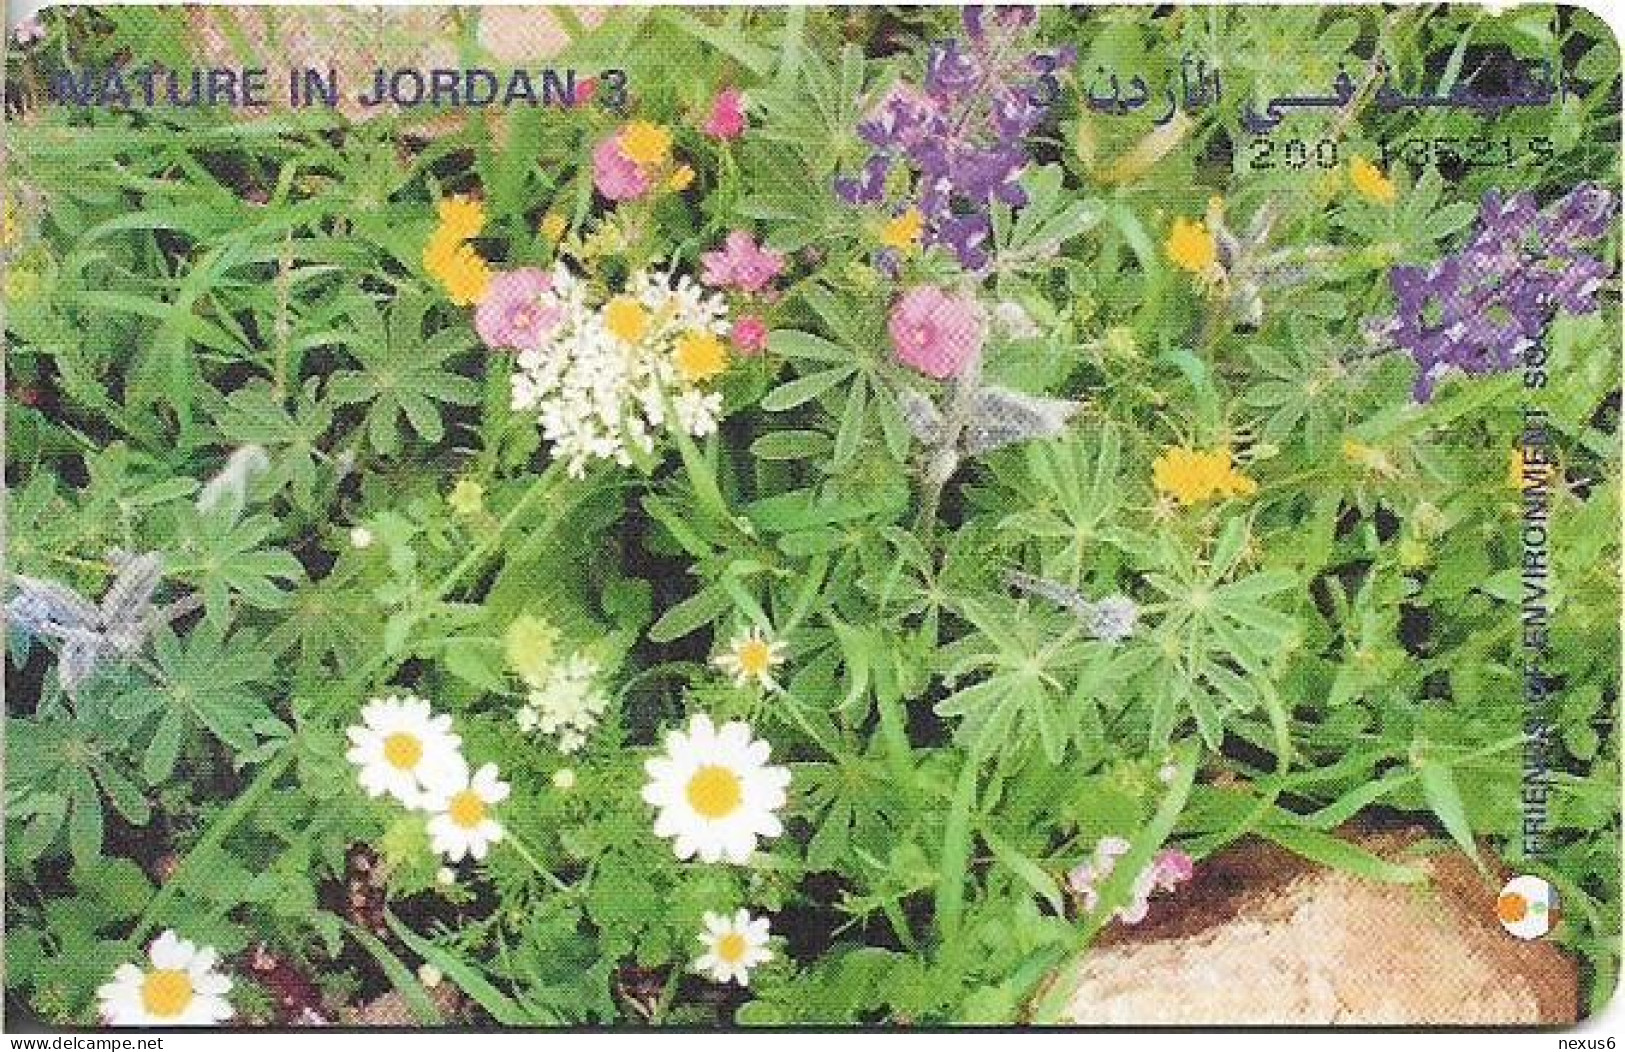 Jordan - Alo - Nature In Jordan 3, Flowers, 08.1998, 15JD, 40.000ex, Used - Jordanien